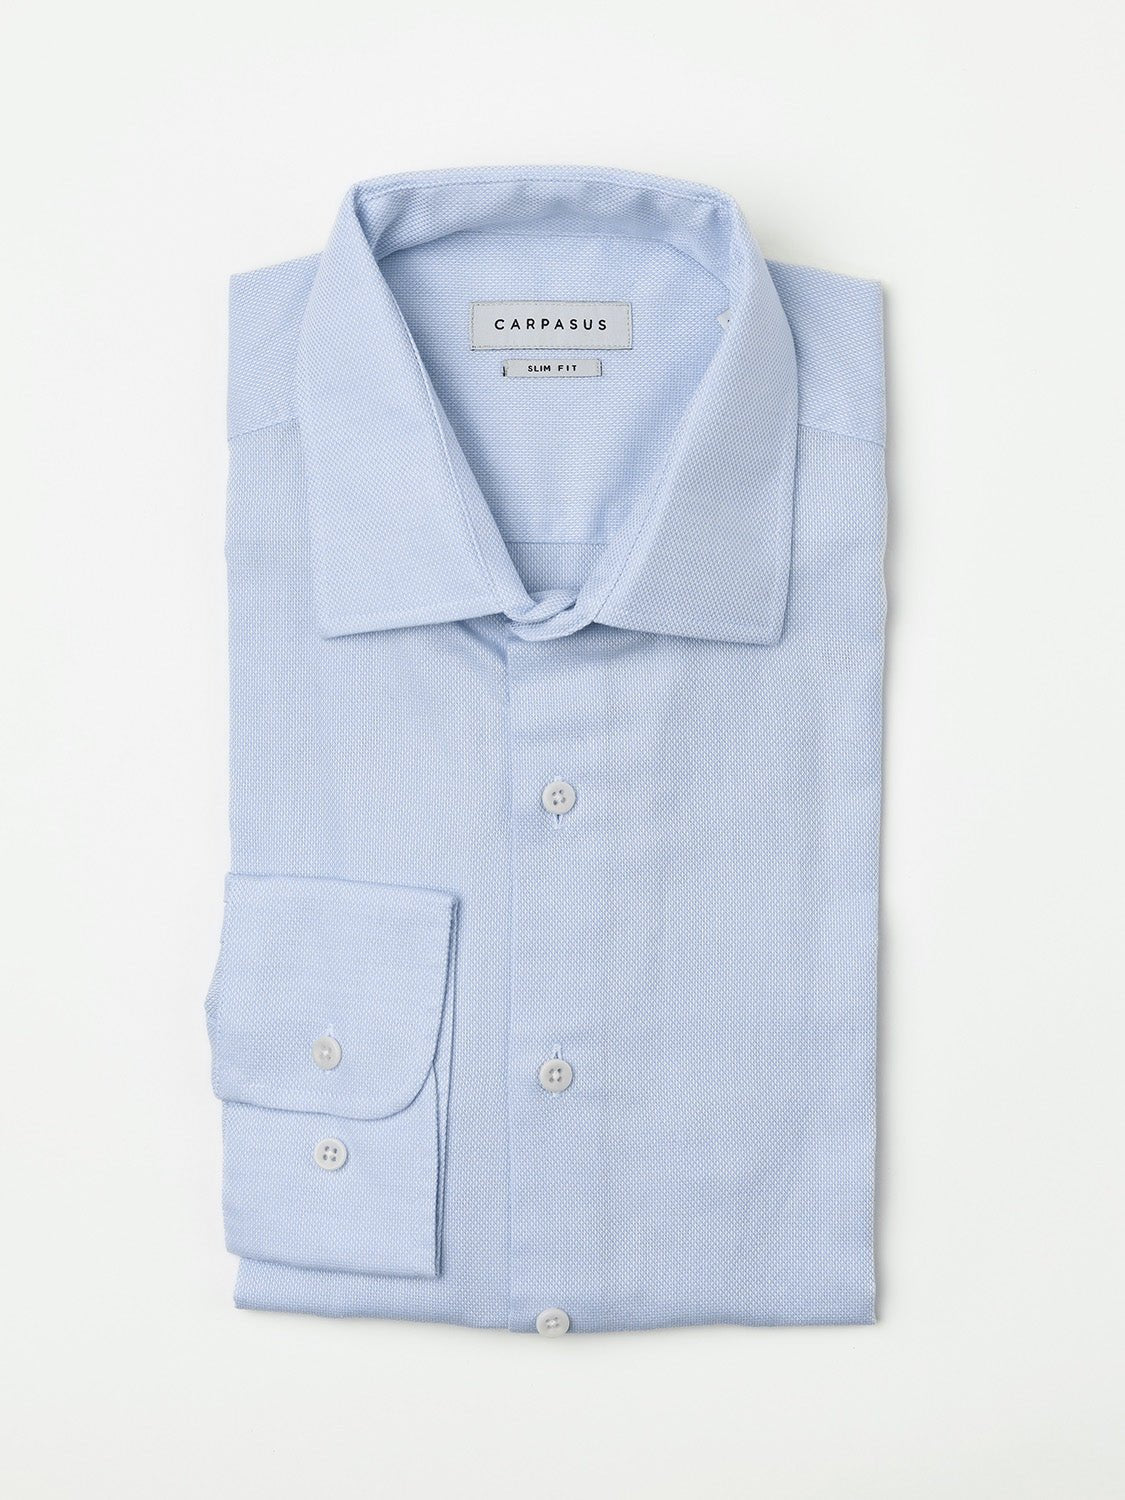 carpasus sustainable organic cotton dress shirt porto lightblue. Nachhaltiges Carpasus Businesshemd aus Bio Baumwolle Porto Hellblau